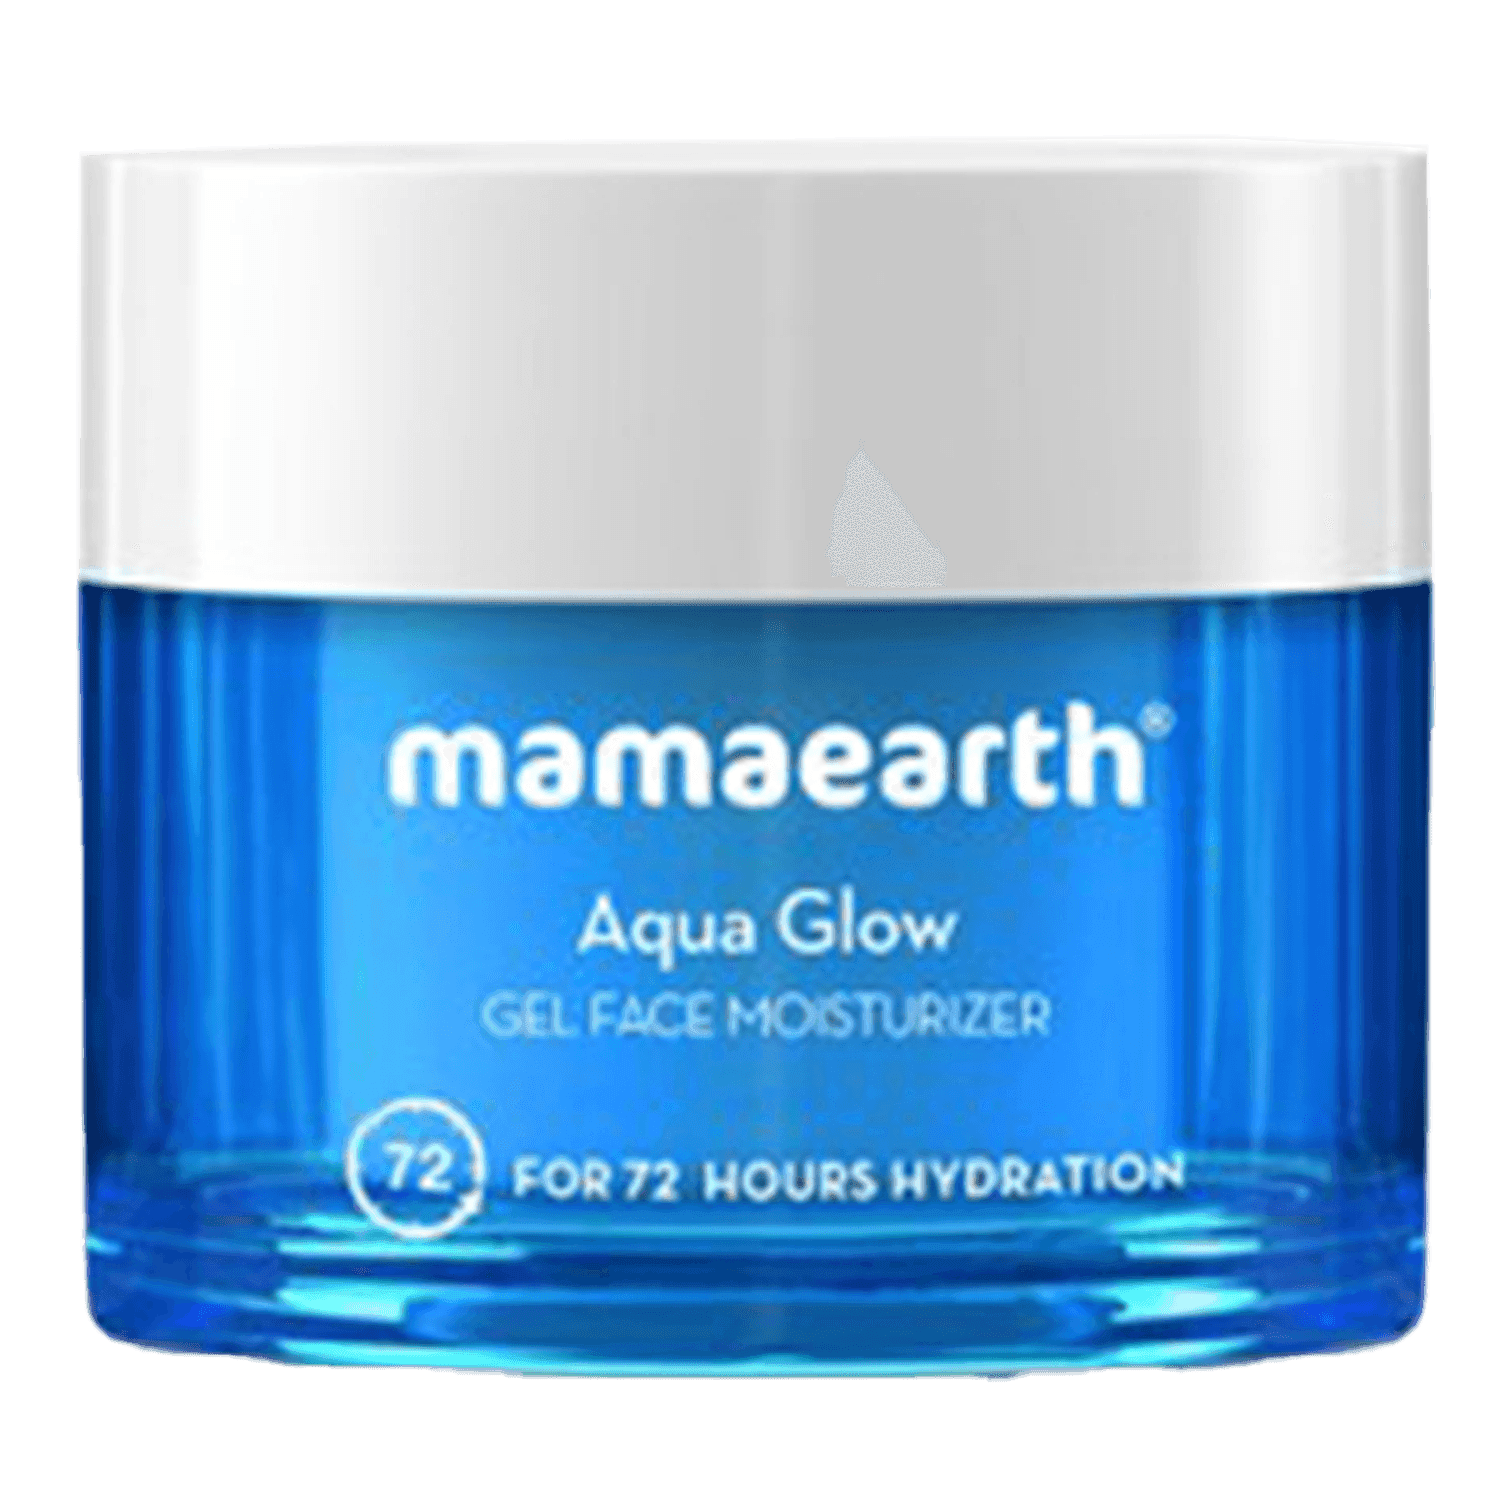 mamaearth aqua glow gel face moisturizer (100ml)